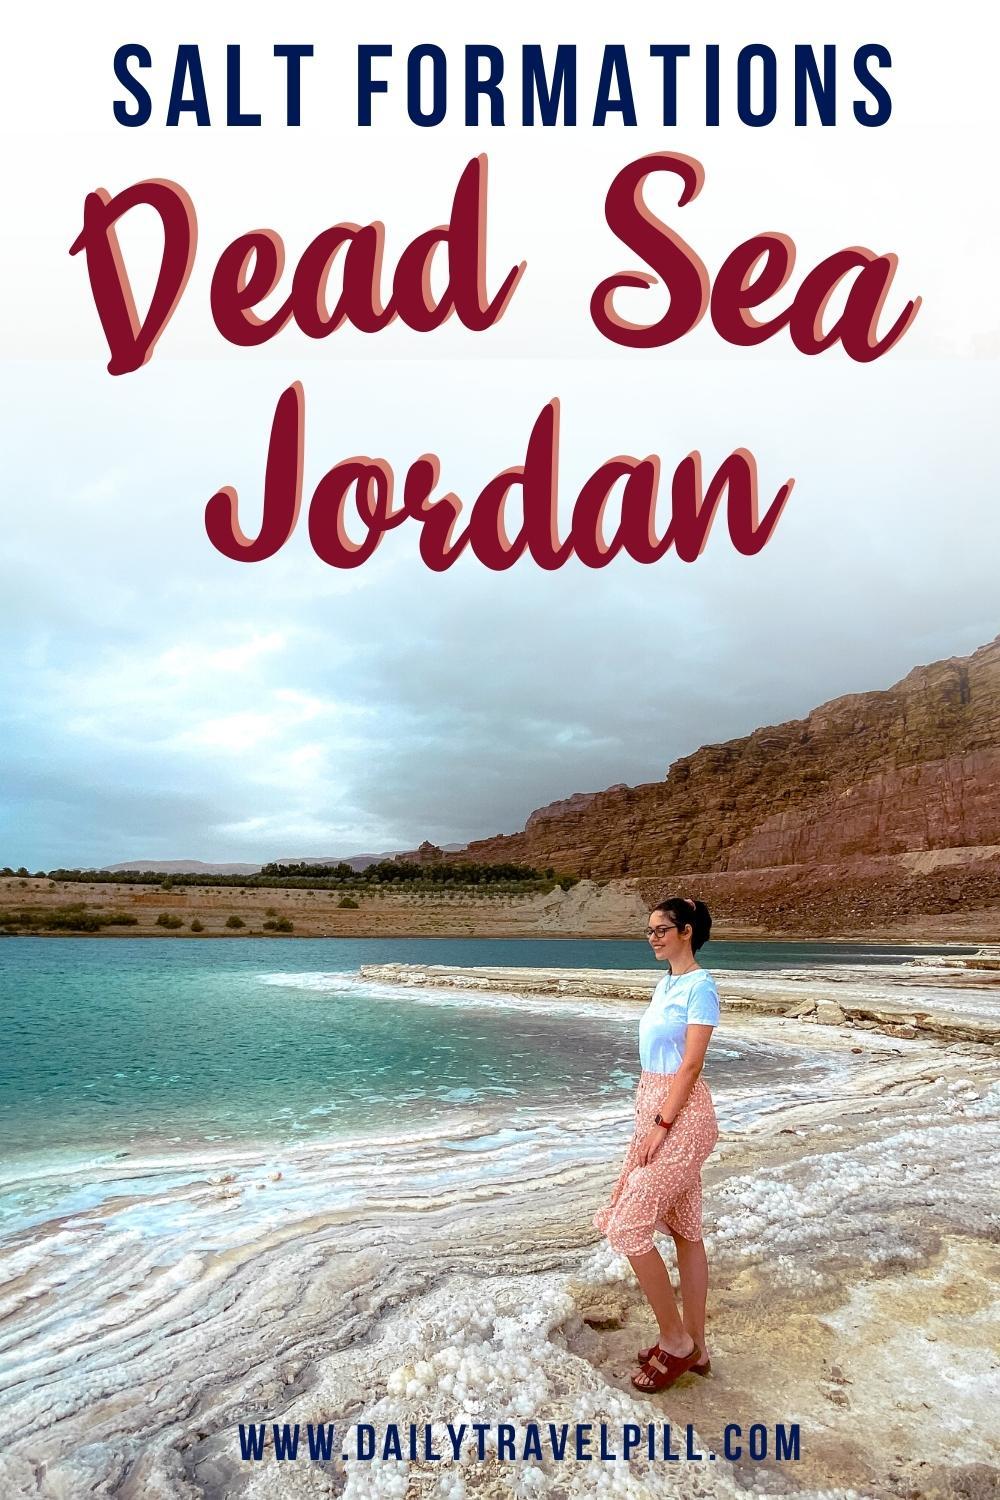 Dead sea salt formations, dead sea salt Jordan, salt formations Jordan